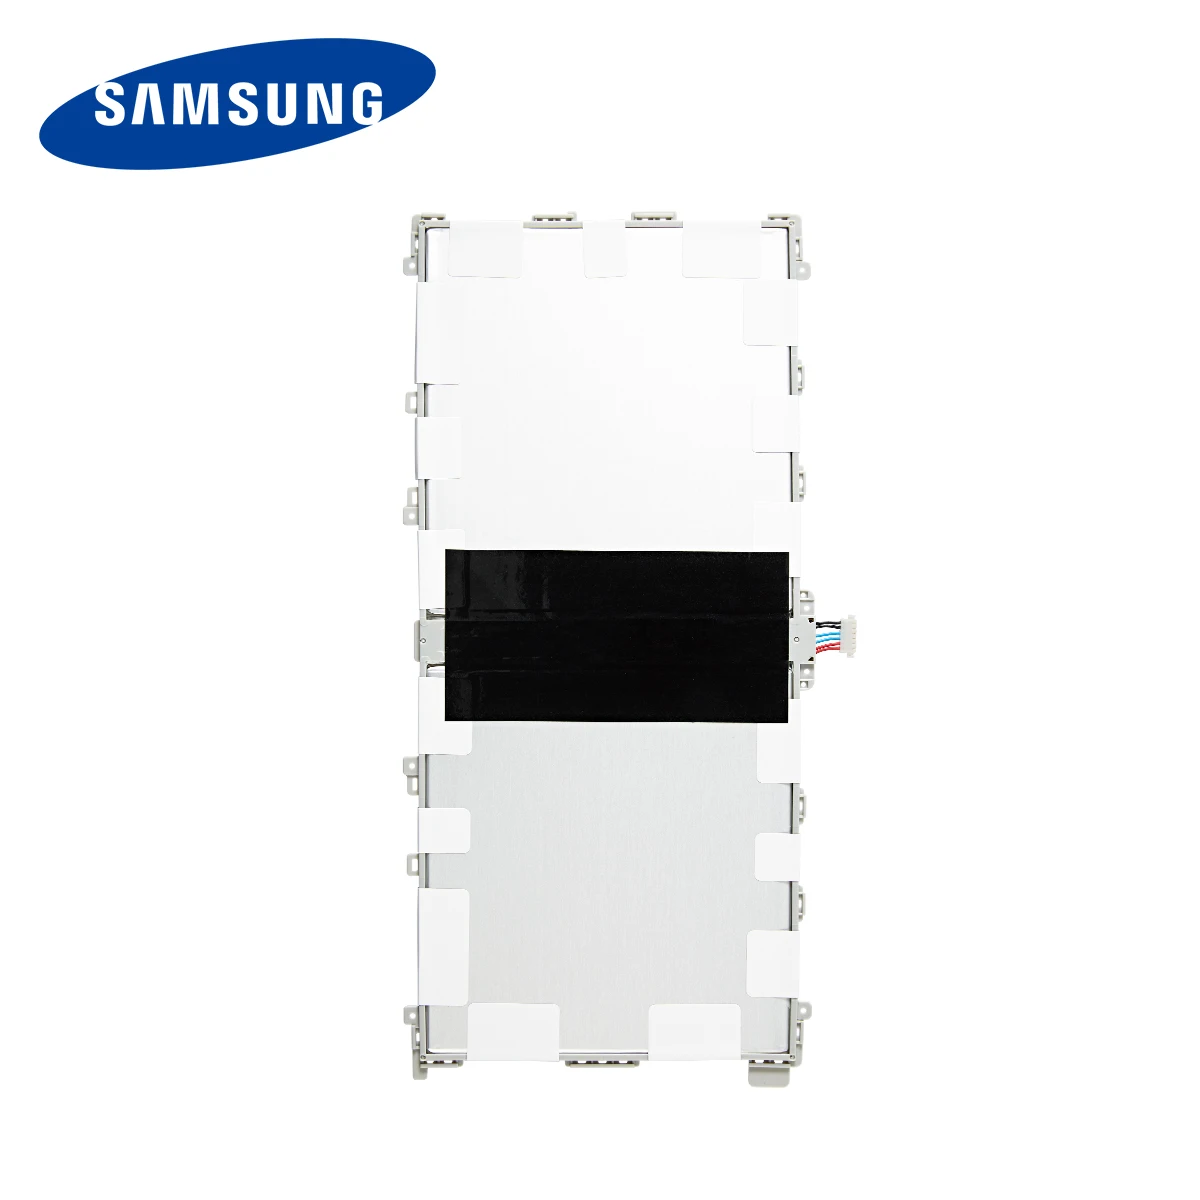 Originalni SAMSUNG Tablični T9500E T9500K T9500C T9500U baterije 9500mAh Za Samsung Galaxy Note 12.2 P900 P901 P905 T900 SM-P900